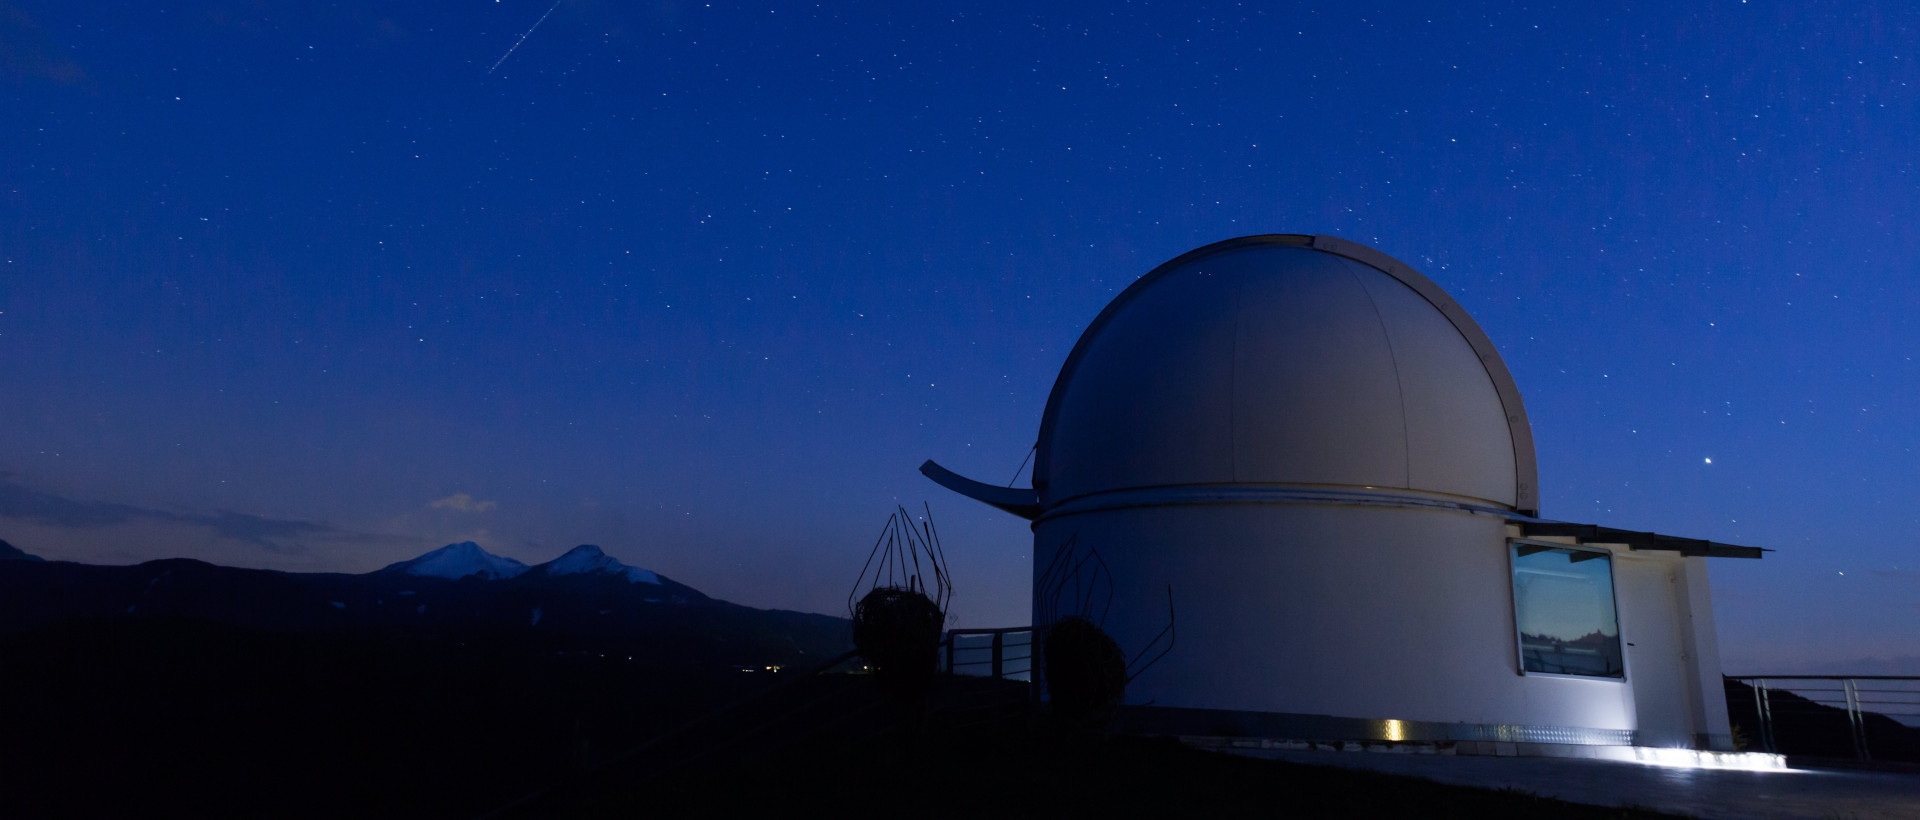 Teleskop mot nattehimmel